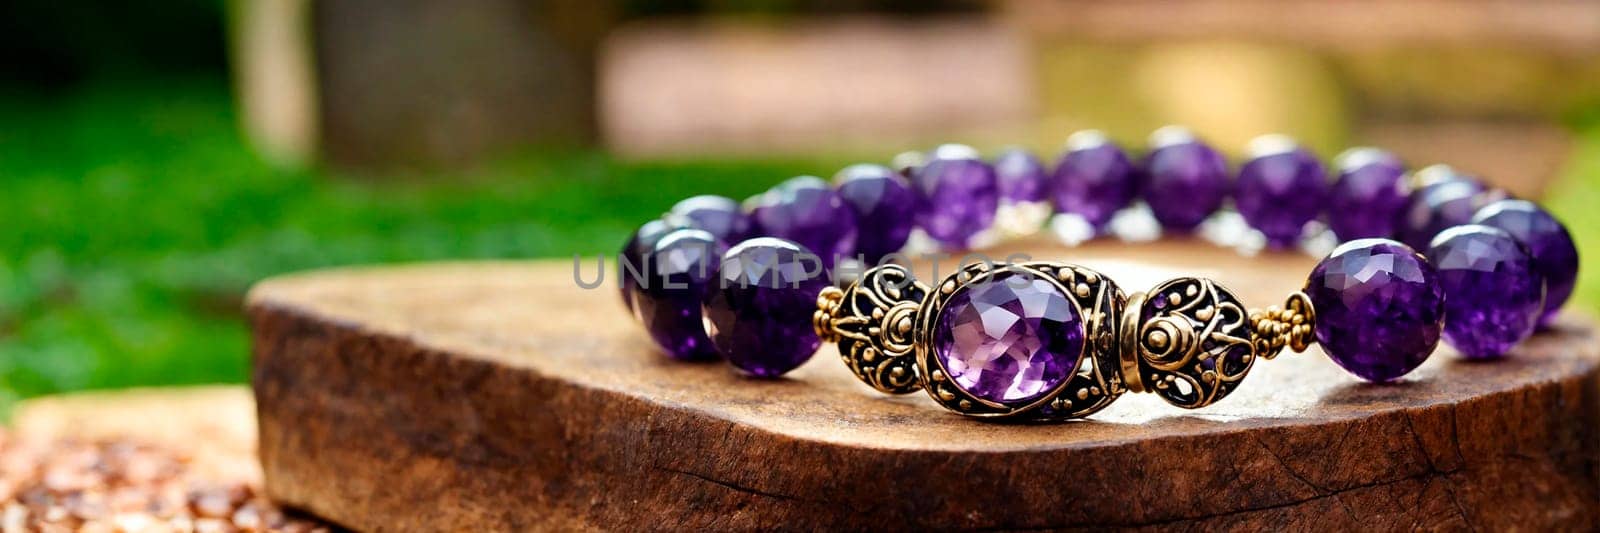 beautiful bracelet with amethyst. Selective focus. purple.